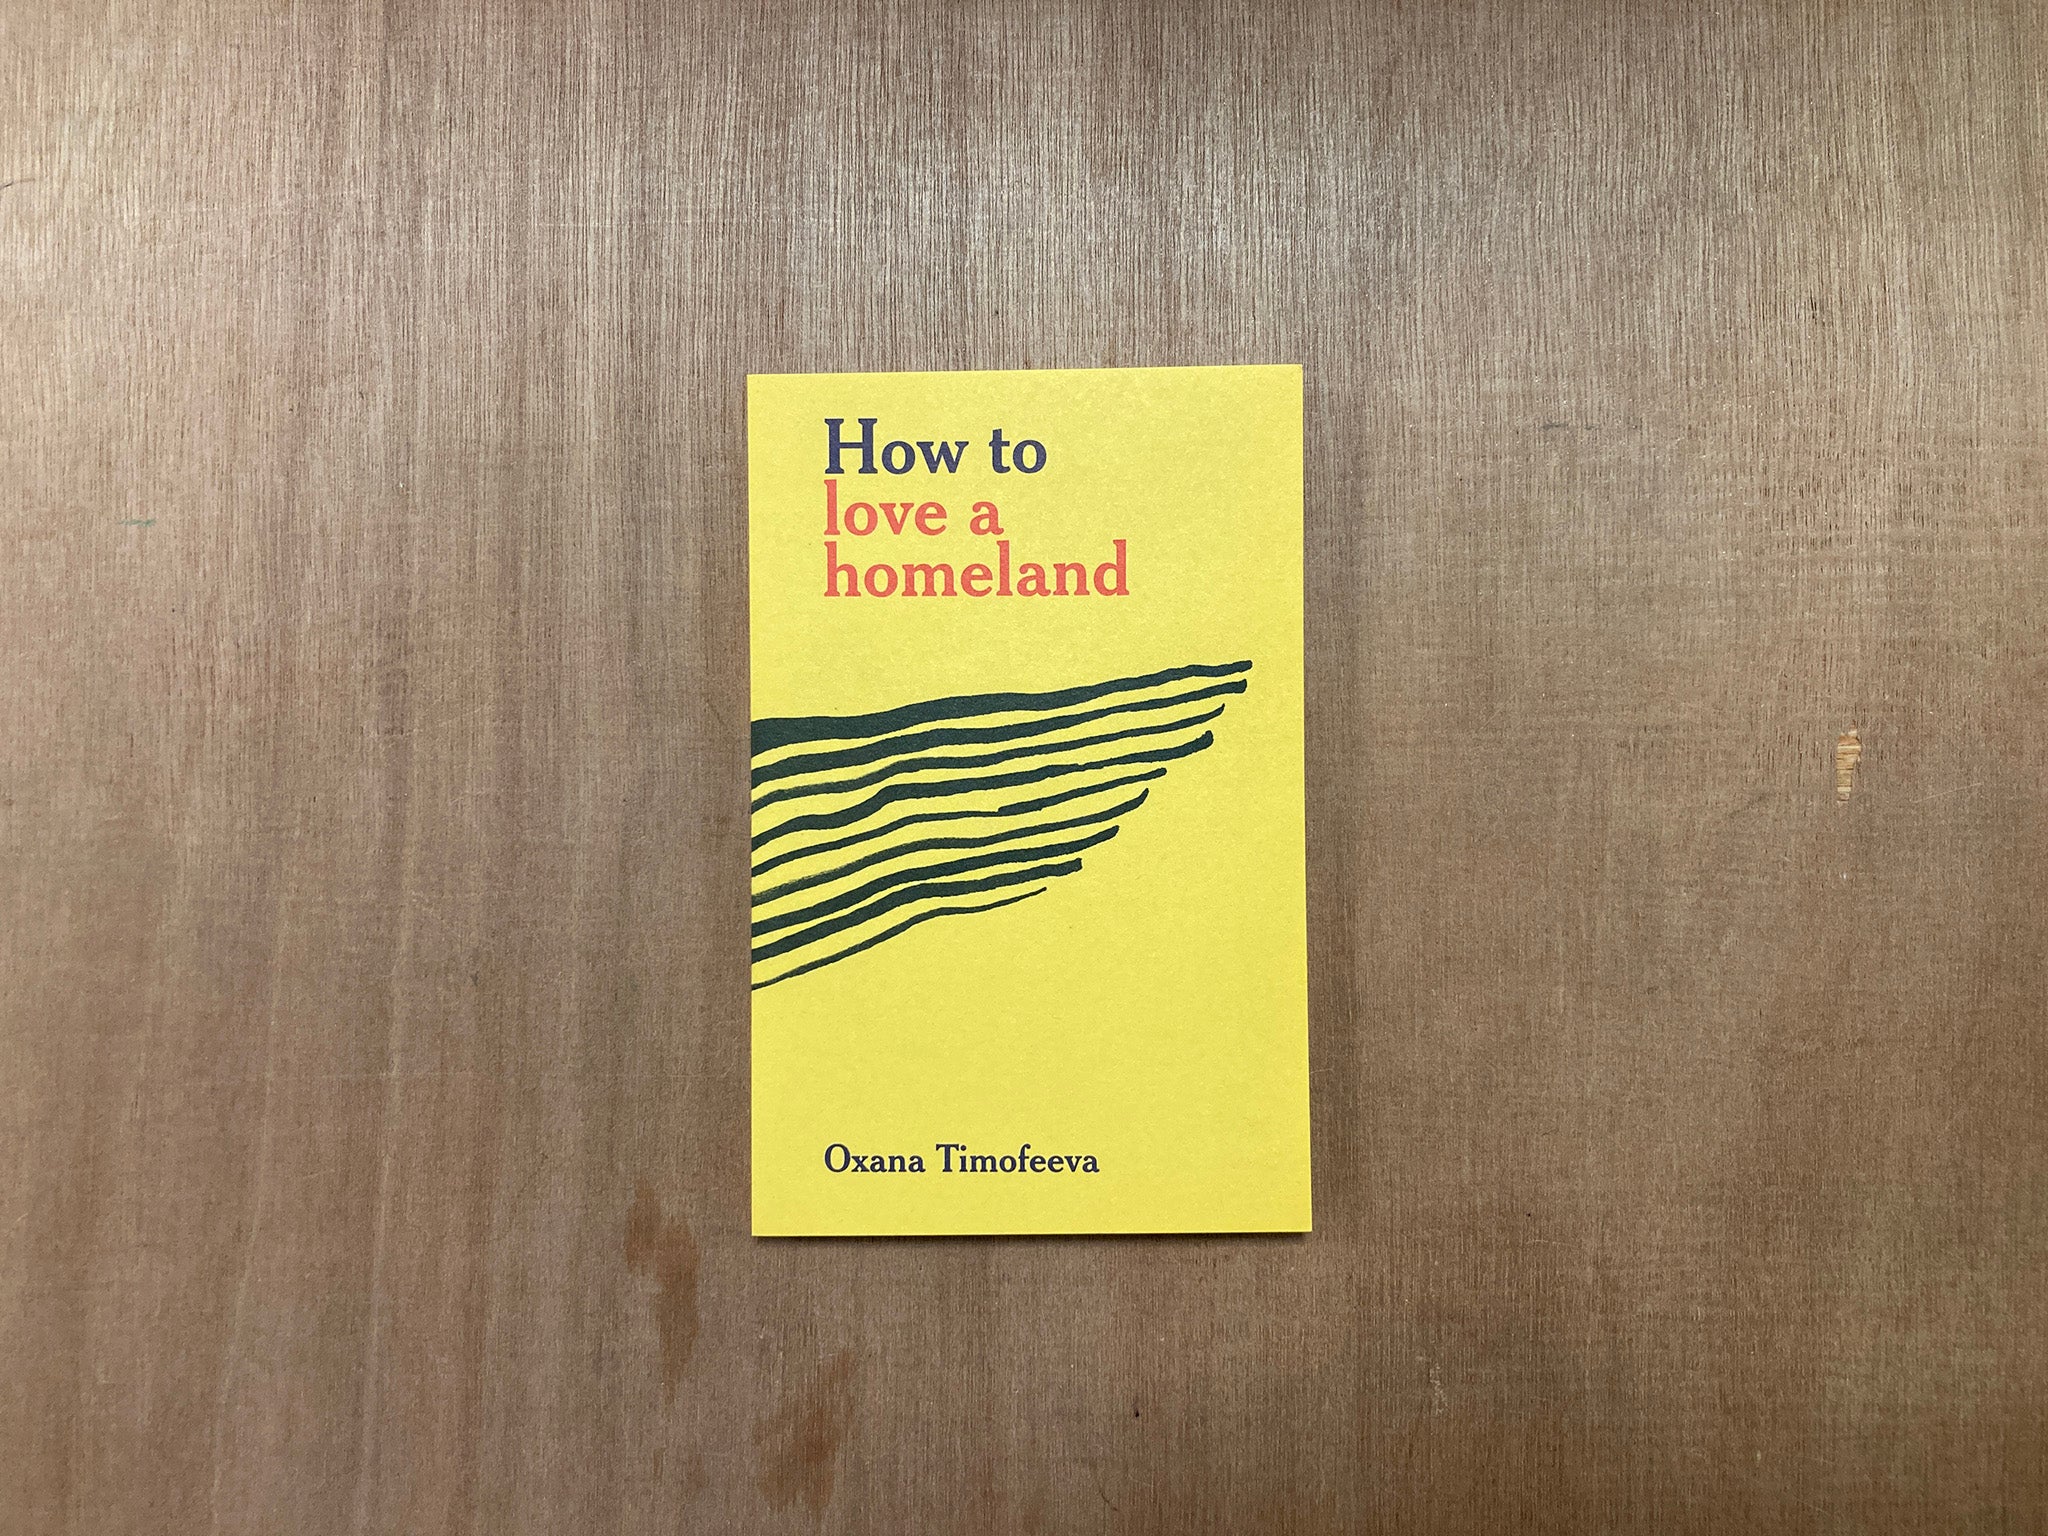 HOW TO LOVE A HOMELAND by Oxana Timofeeva